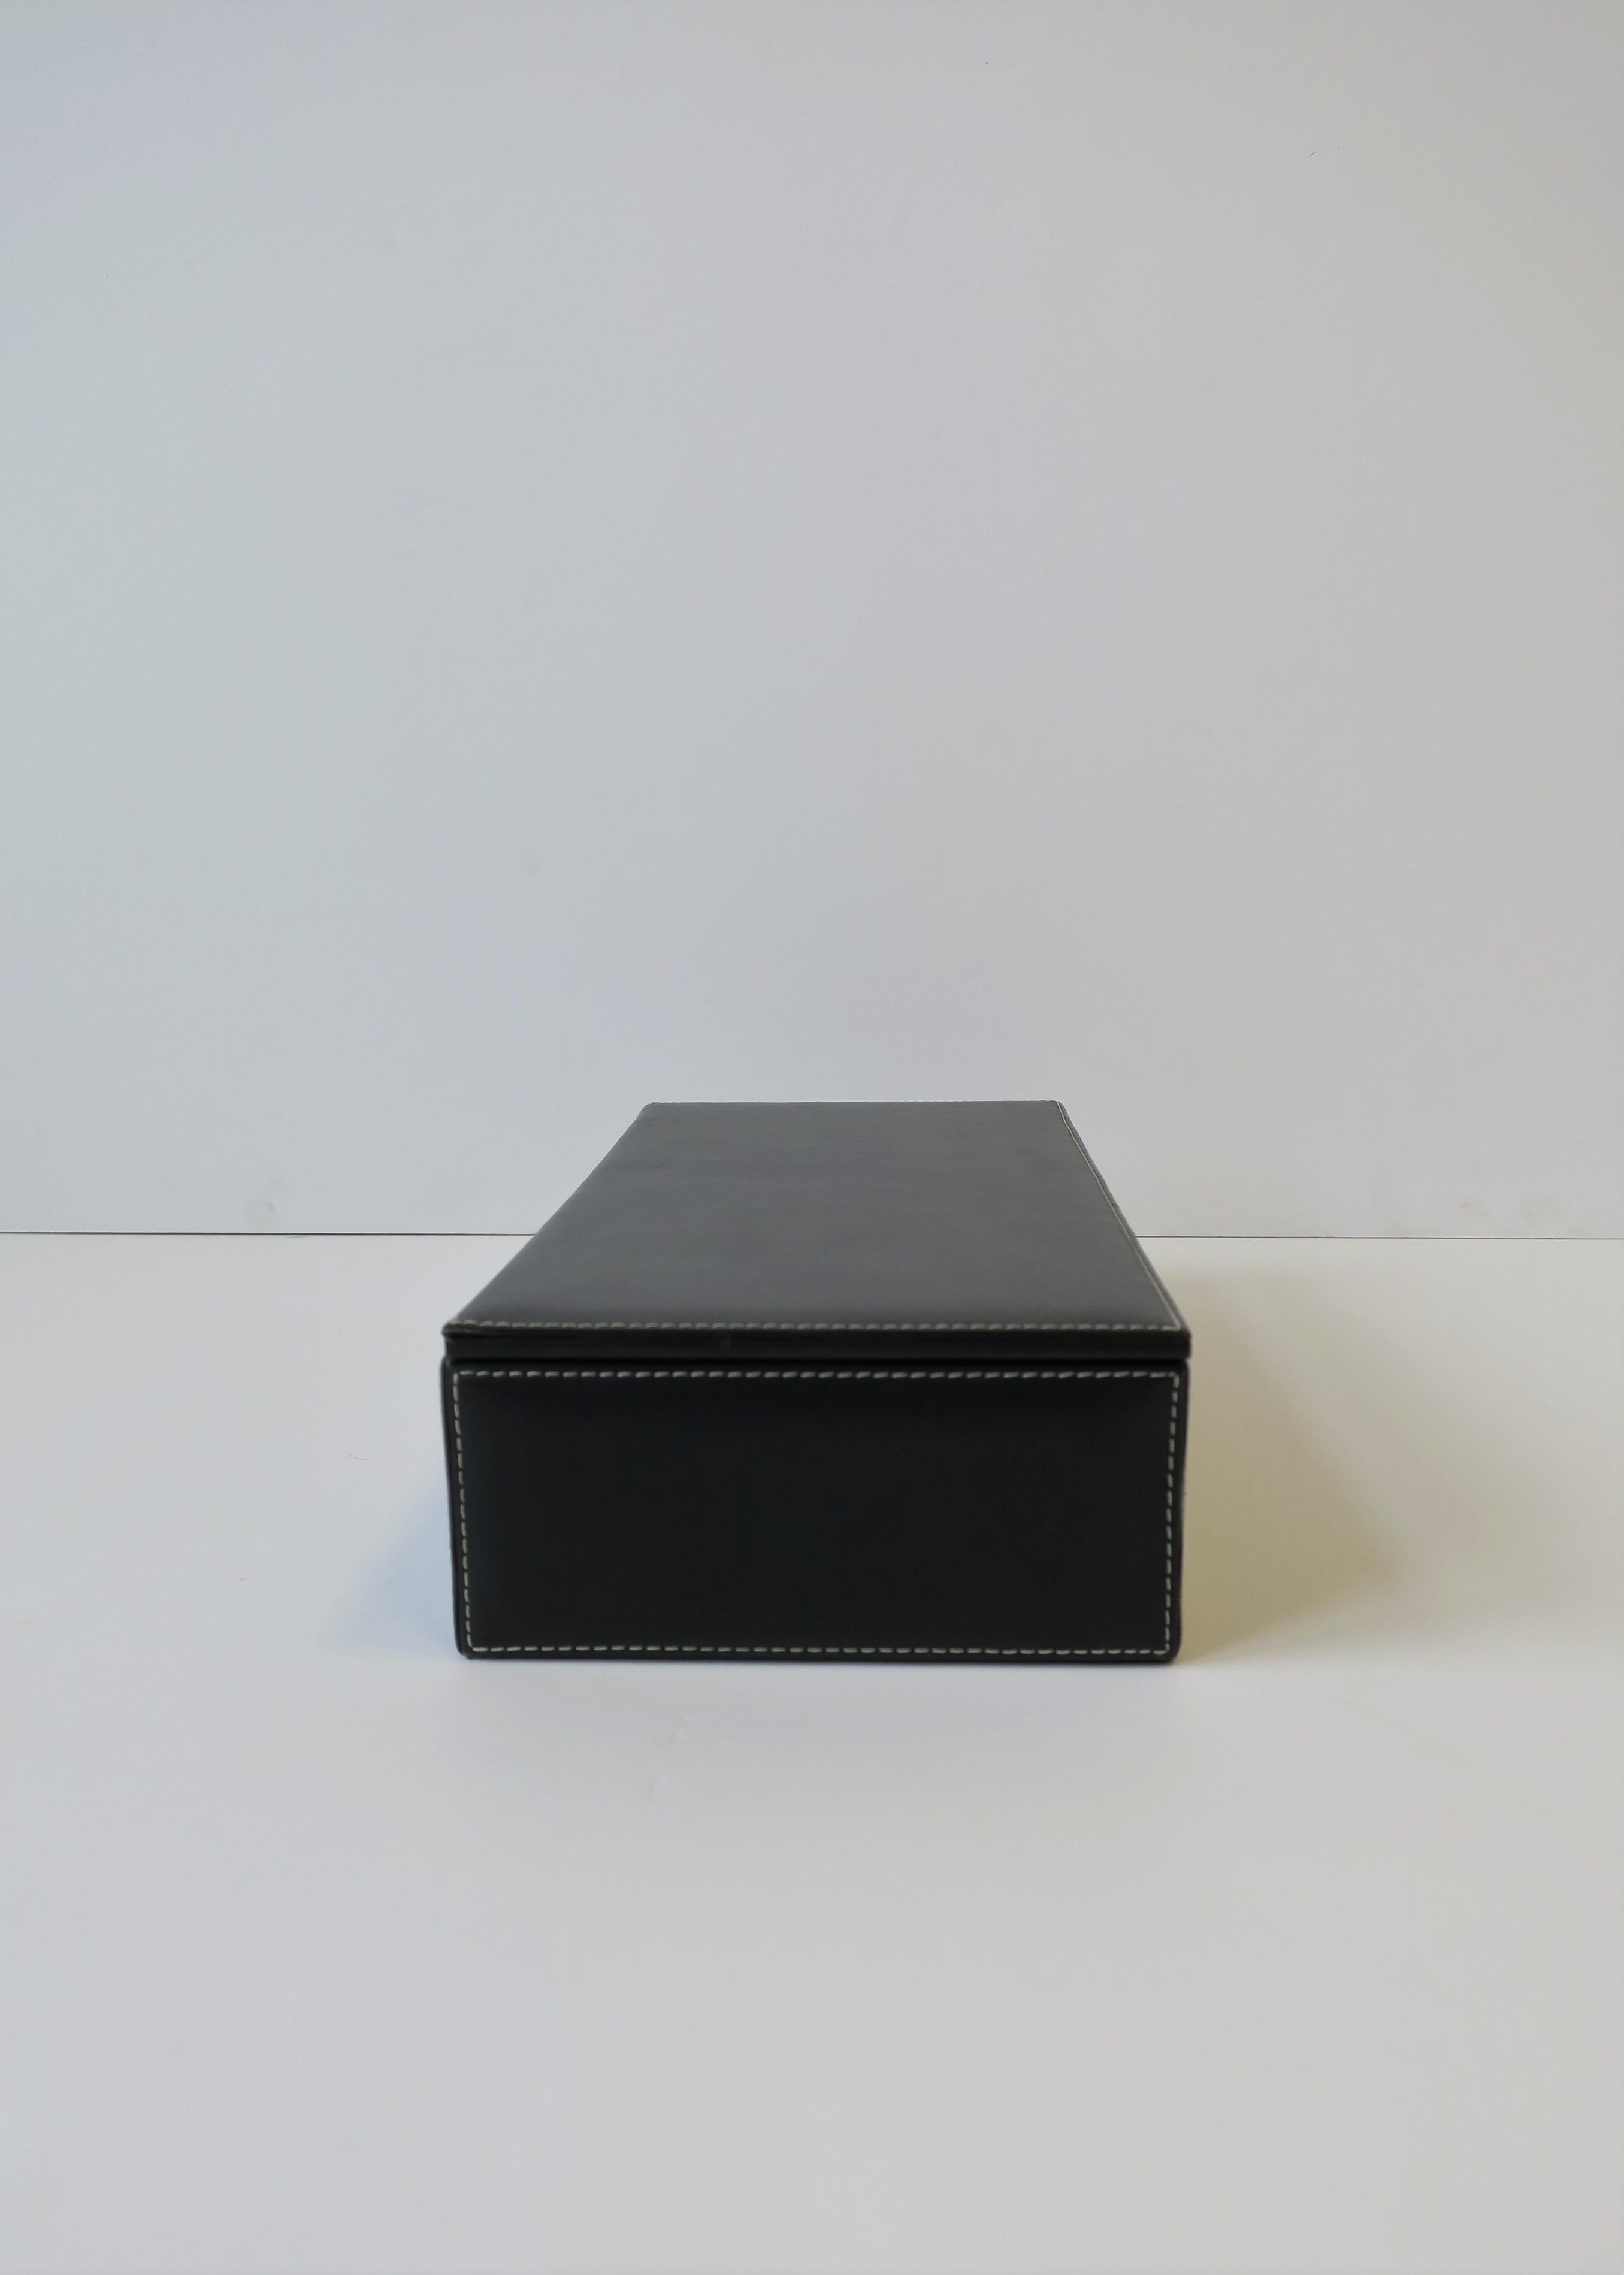 Black Leather Jewelry or Desk Box 4